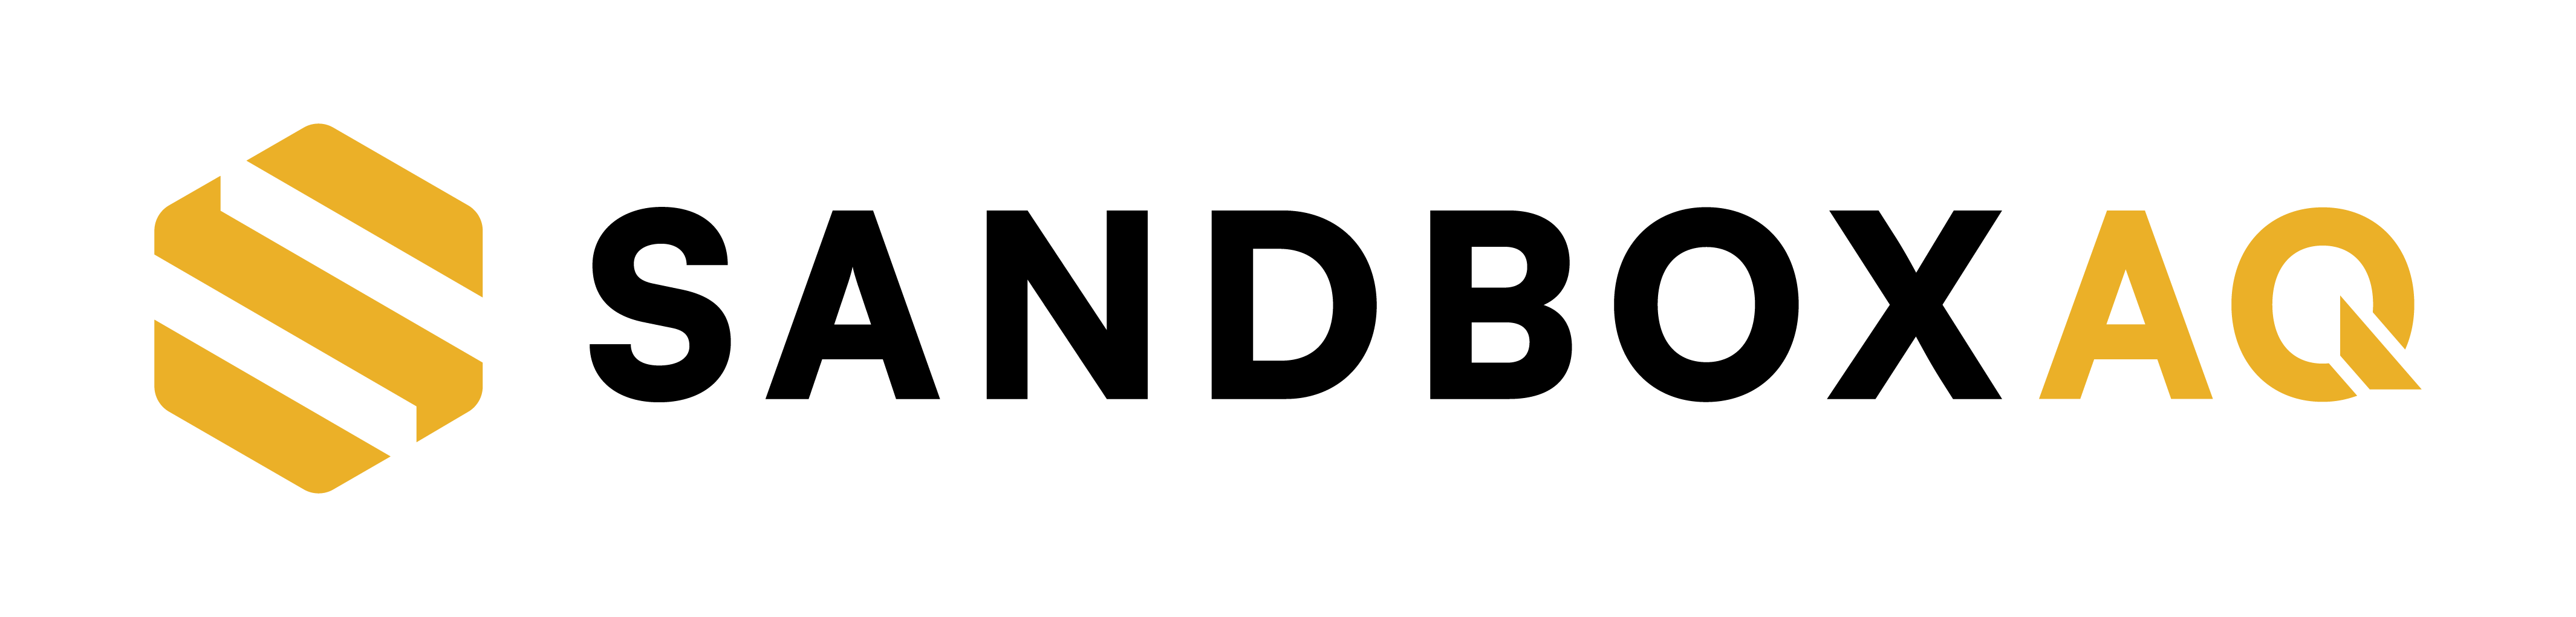 The SandboxAQ logo